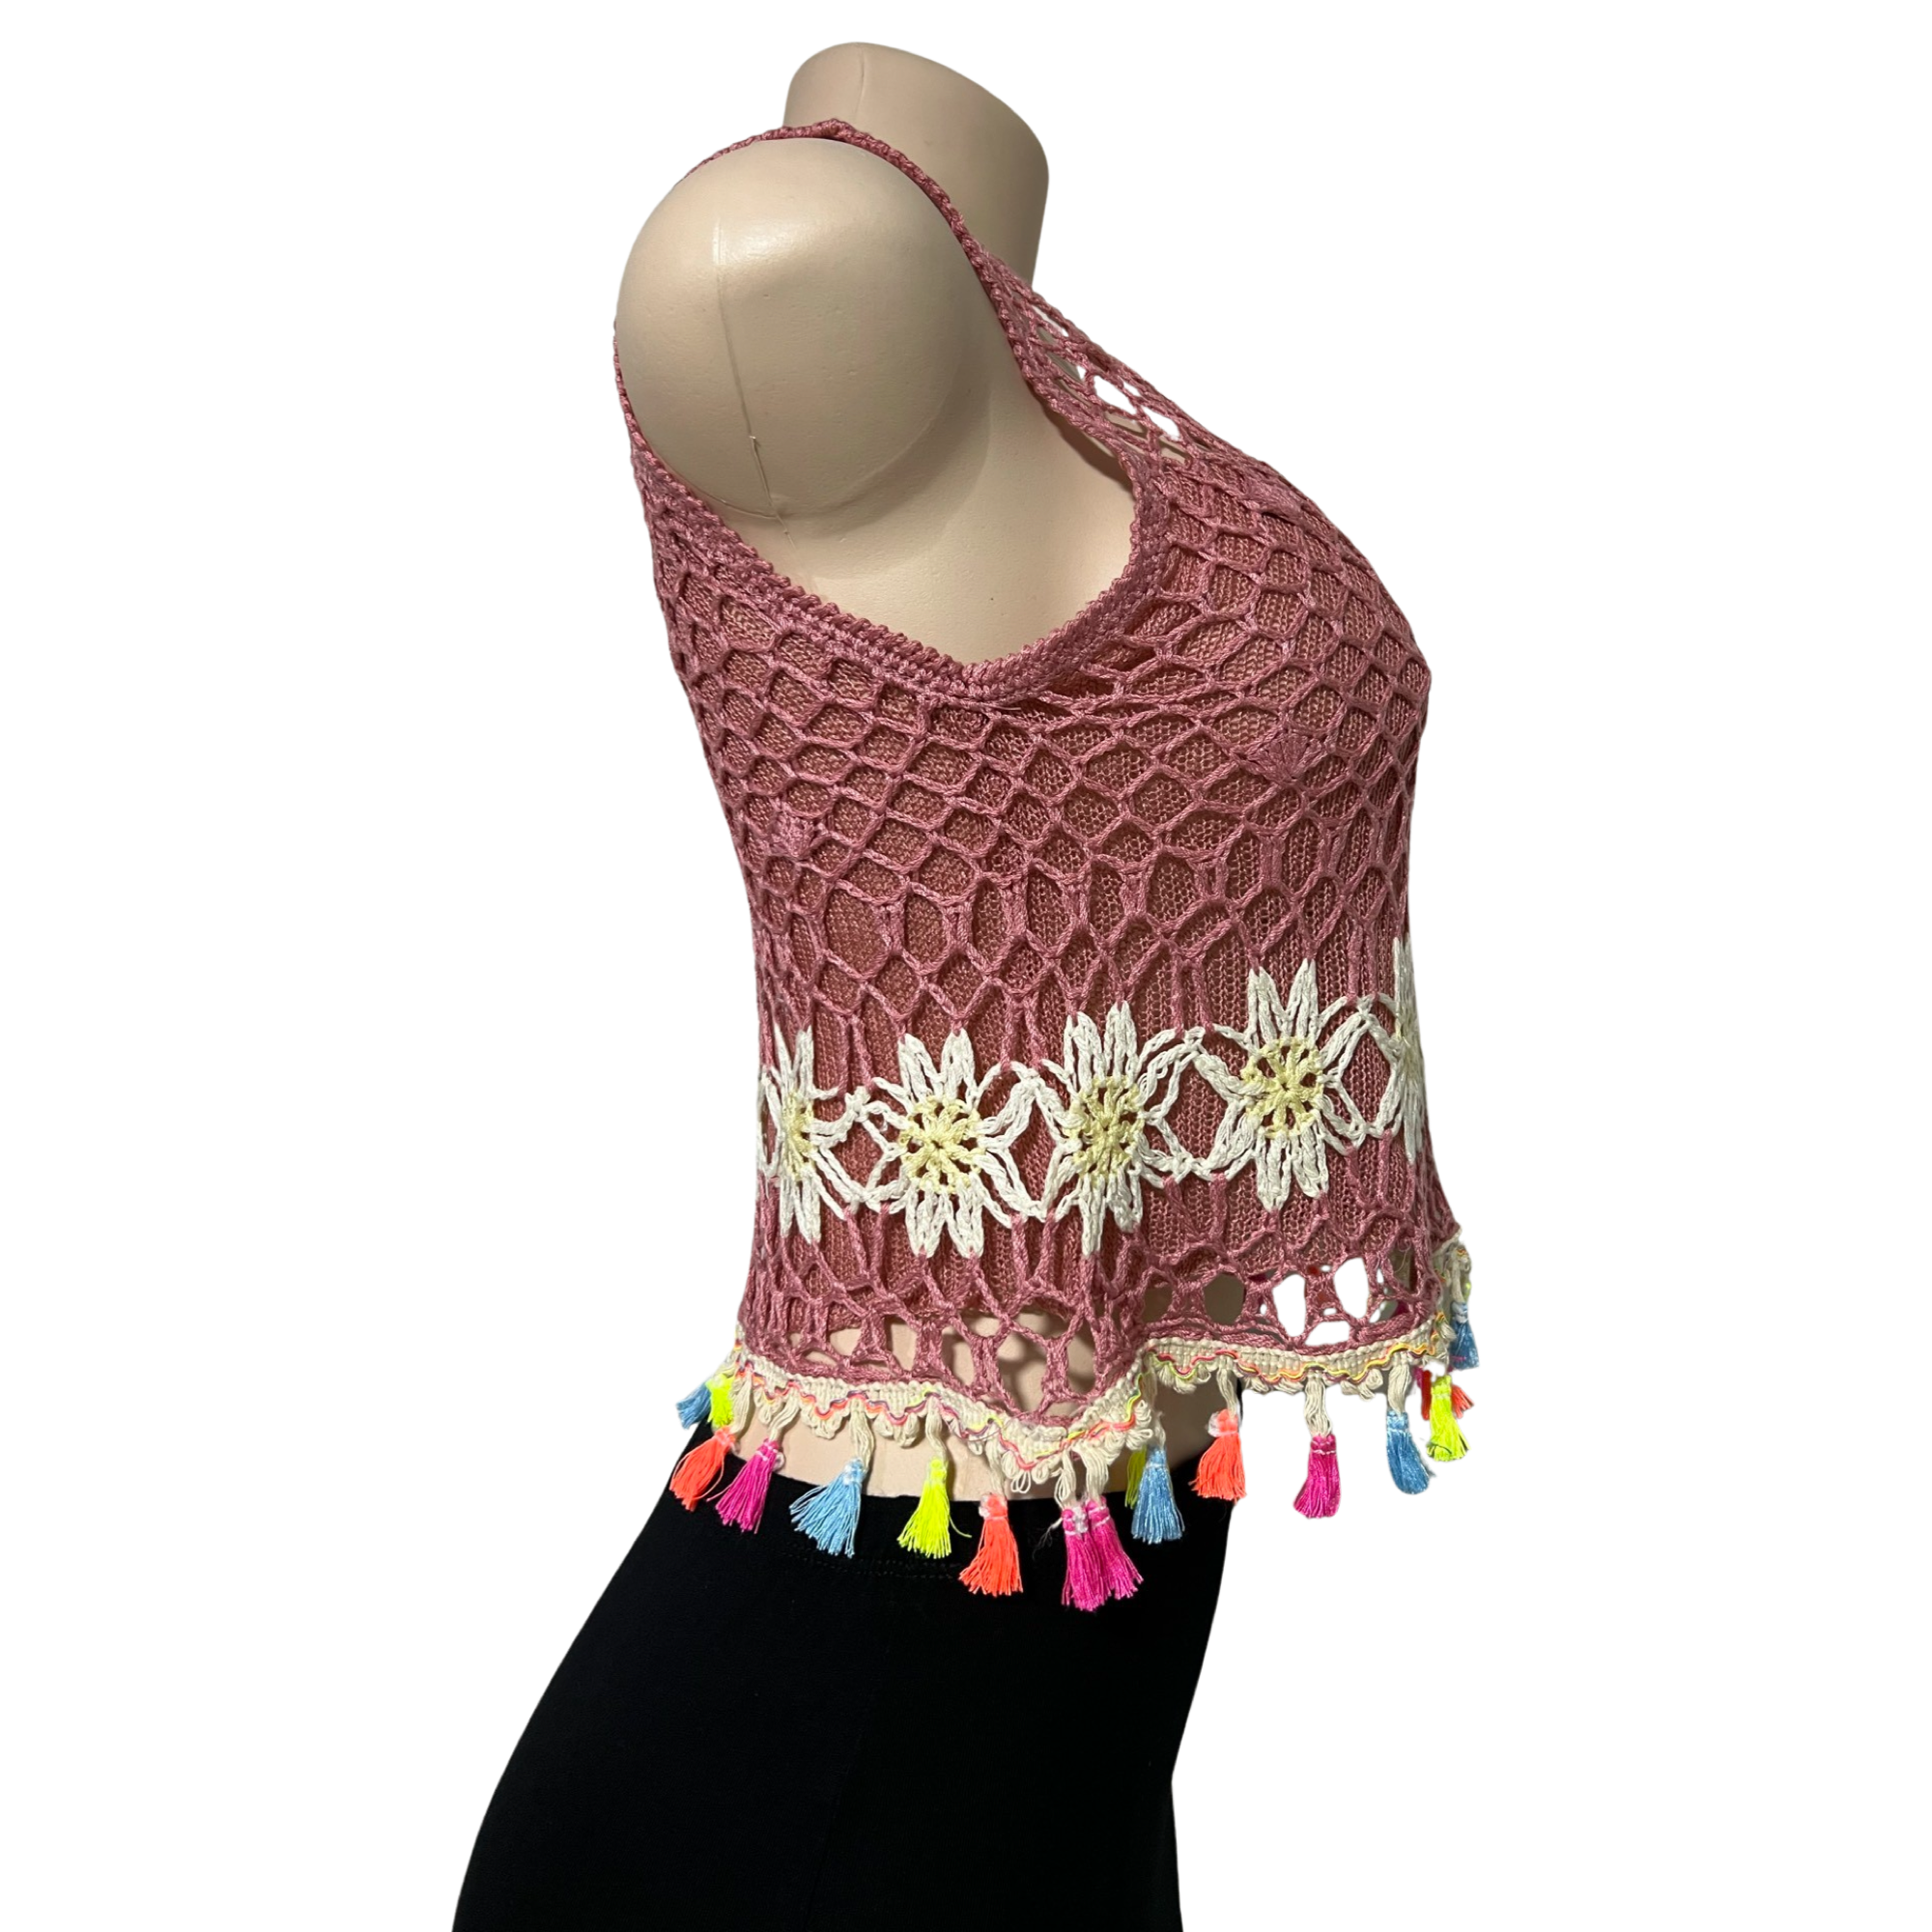 Women's See Through Mesh Lace Crop Top Crochet Sleeveless.